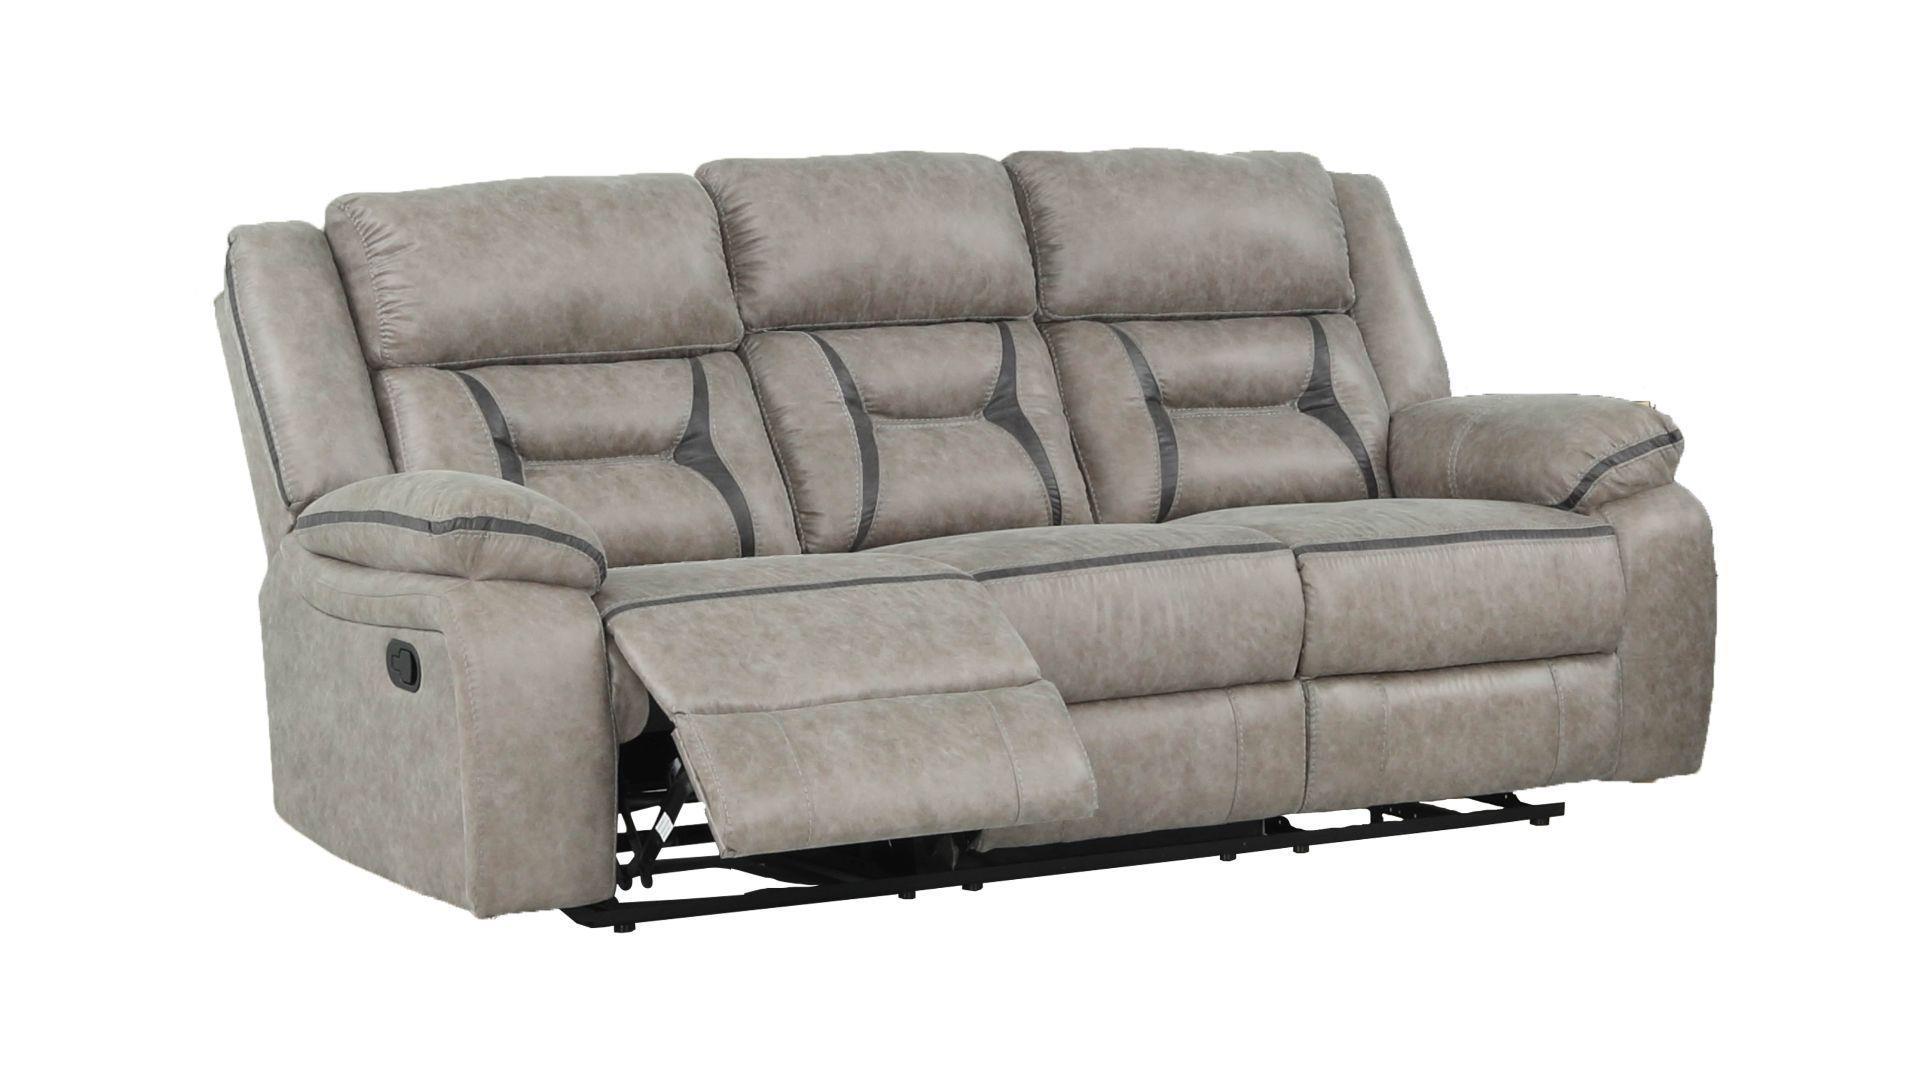 Galaxy Home Furniture DENALI Recliner Sofa